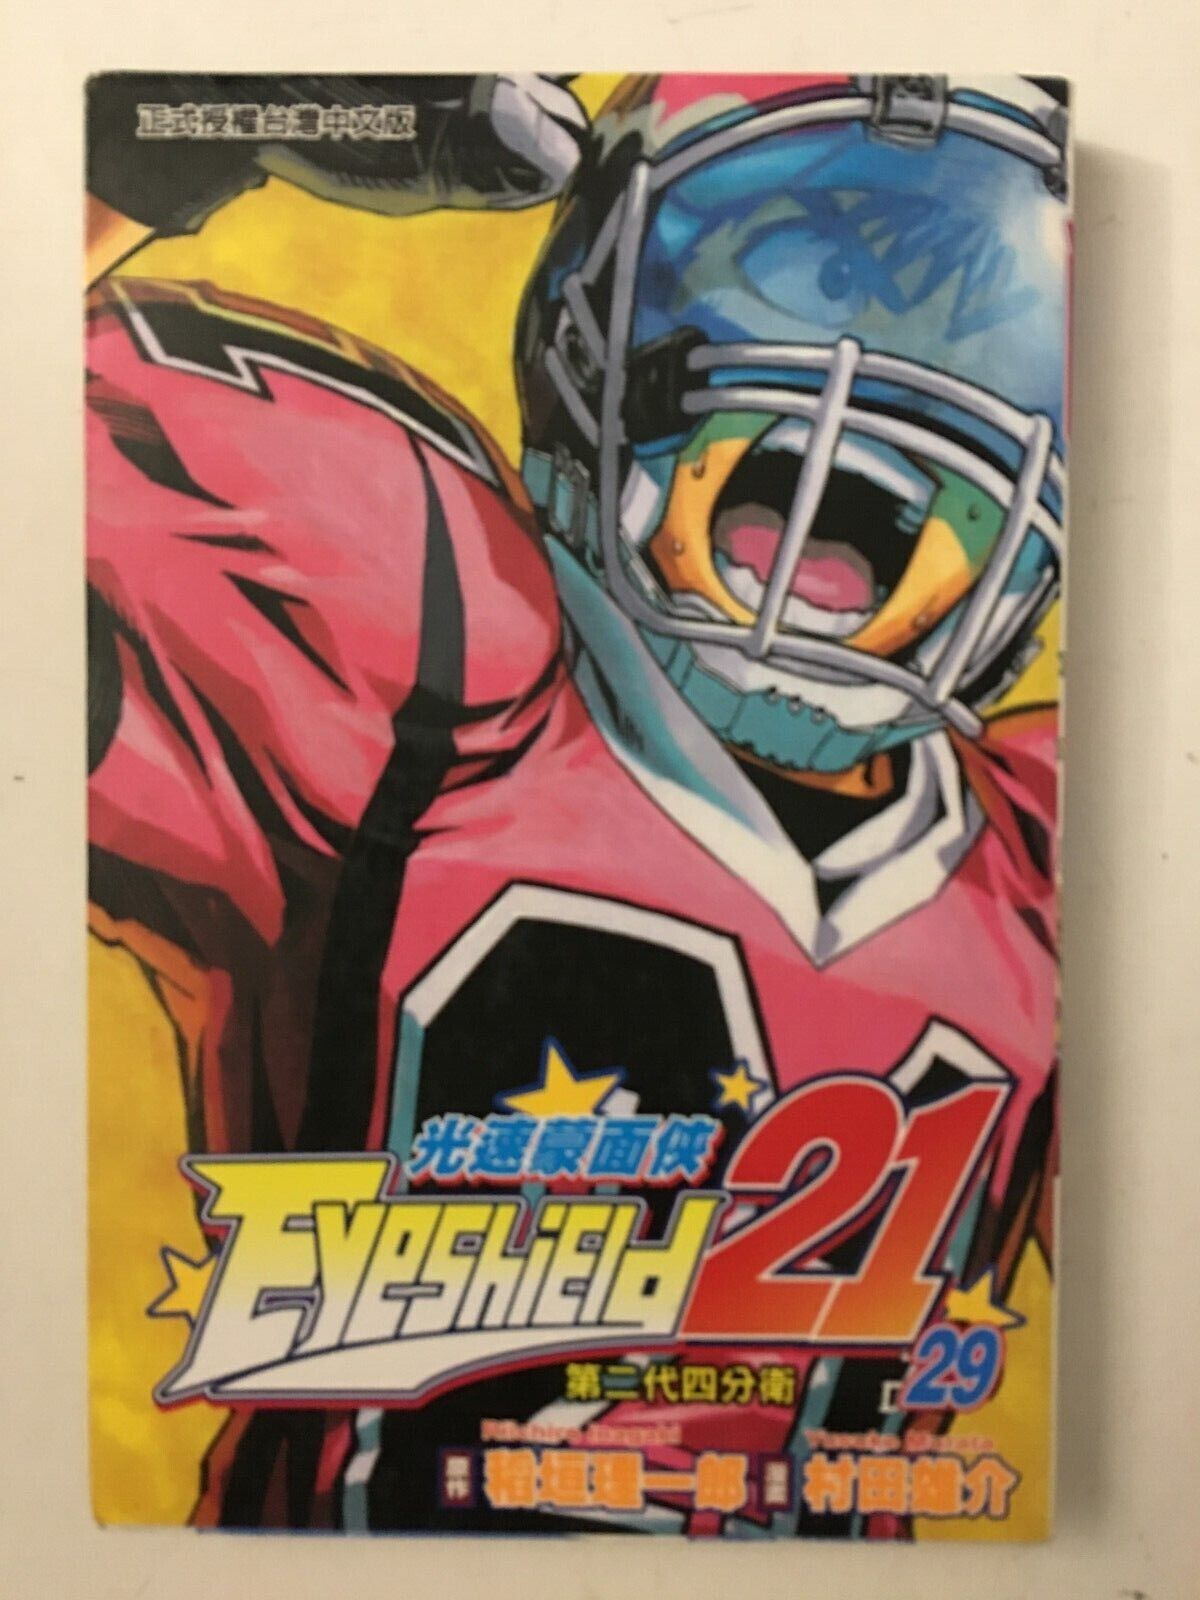 Eyeshield 21 Volume 29 Manga CHINESE Edition Action Sports Football 2002 Shueish